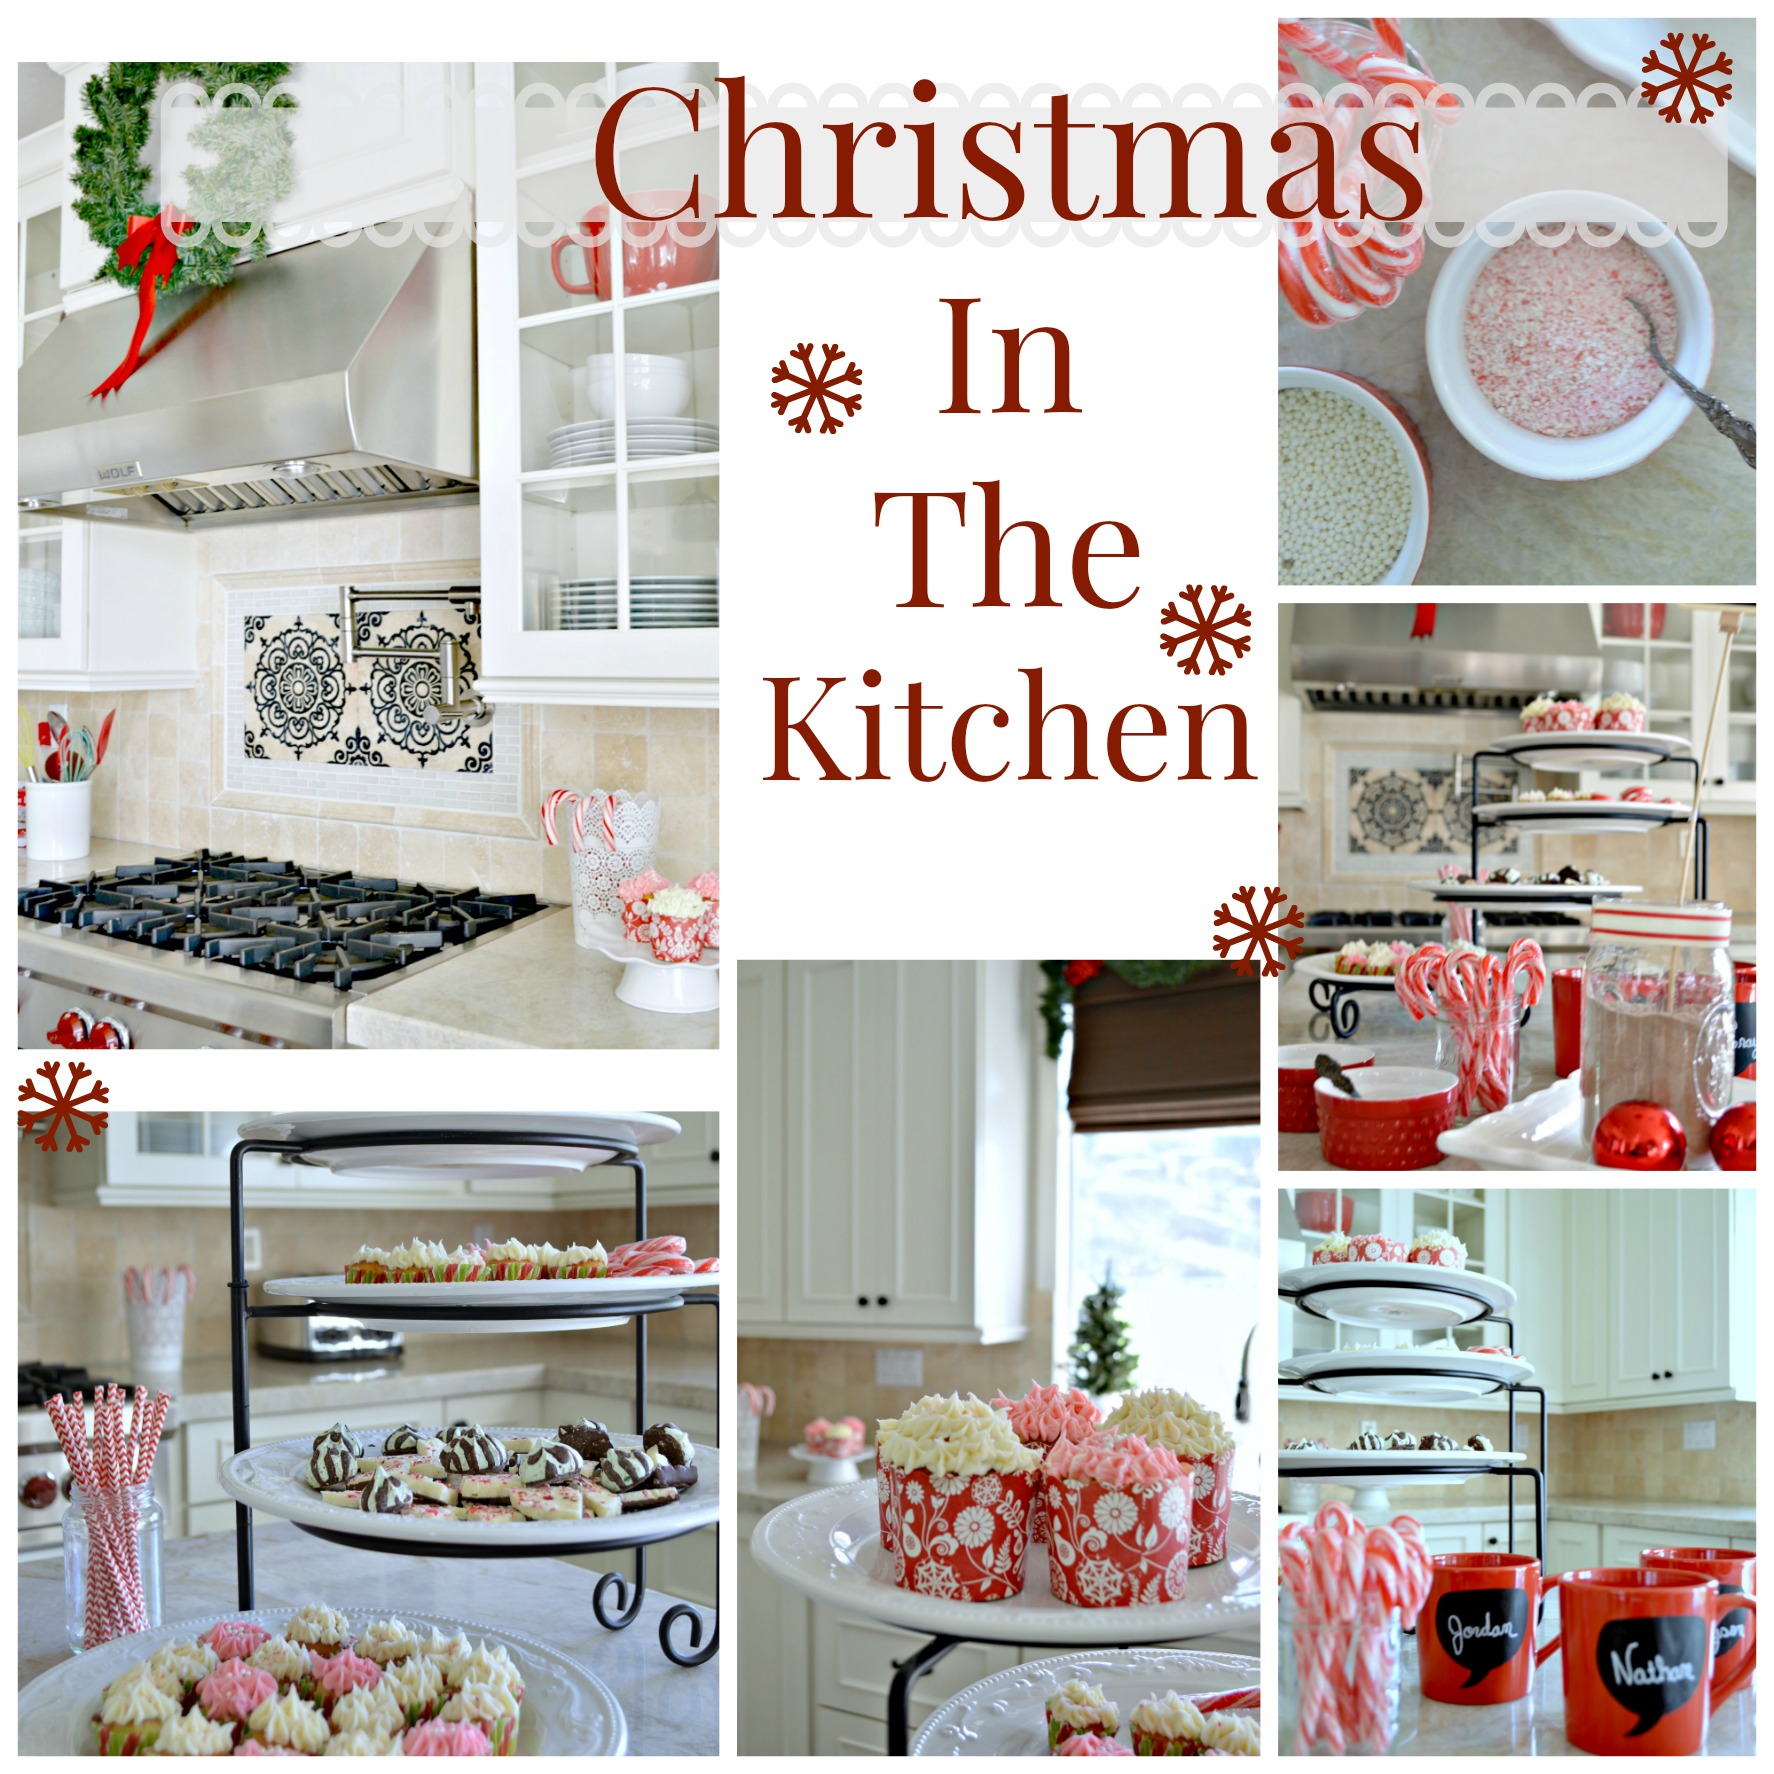 https://myuncommonsliceofsuburbia.com/wp-content/uploads/2014/11/Christmas-decor-in-the-kitchen.jpg